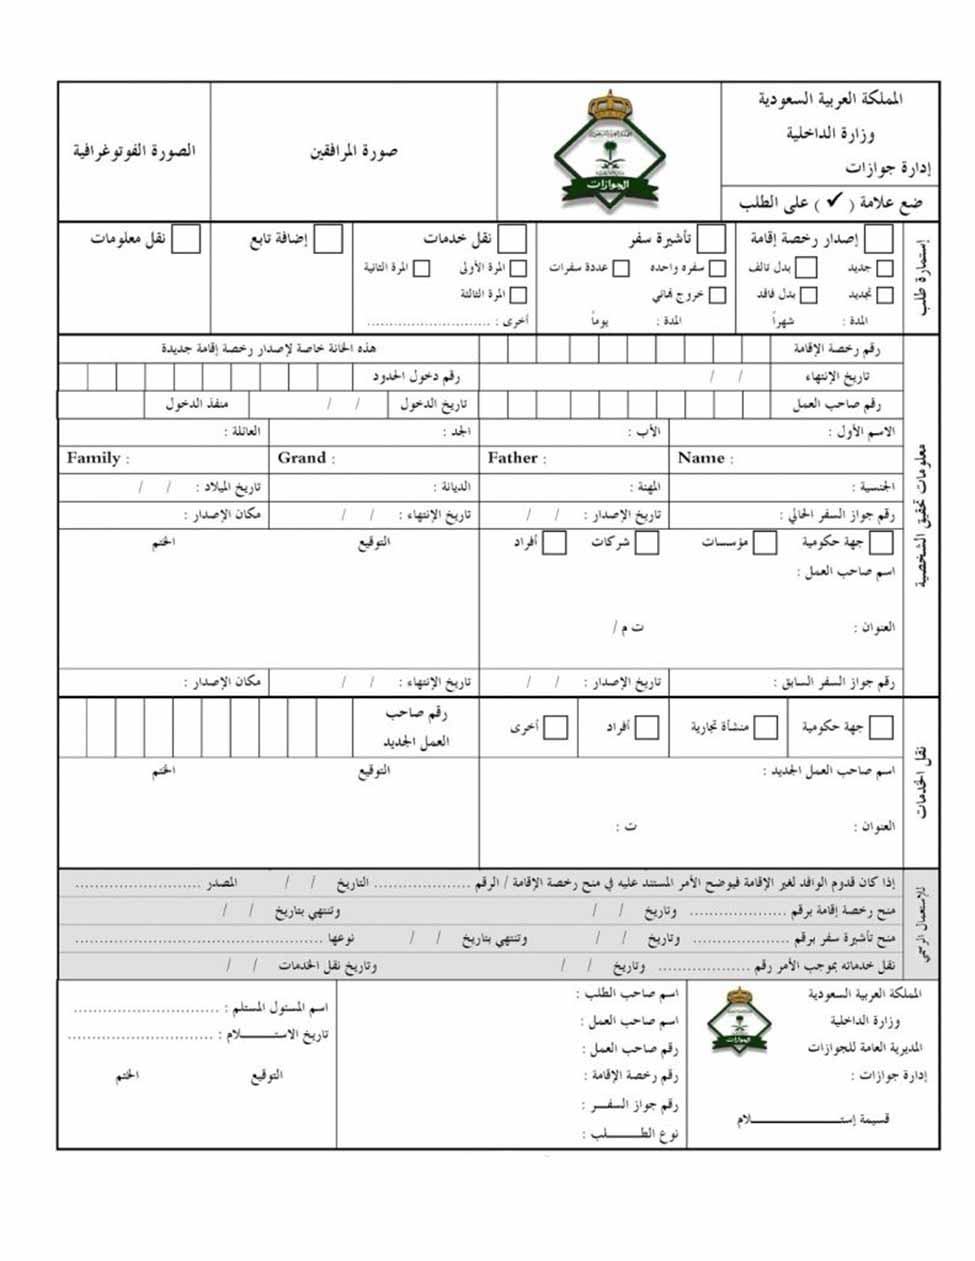 iqama application form